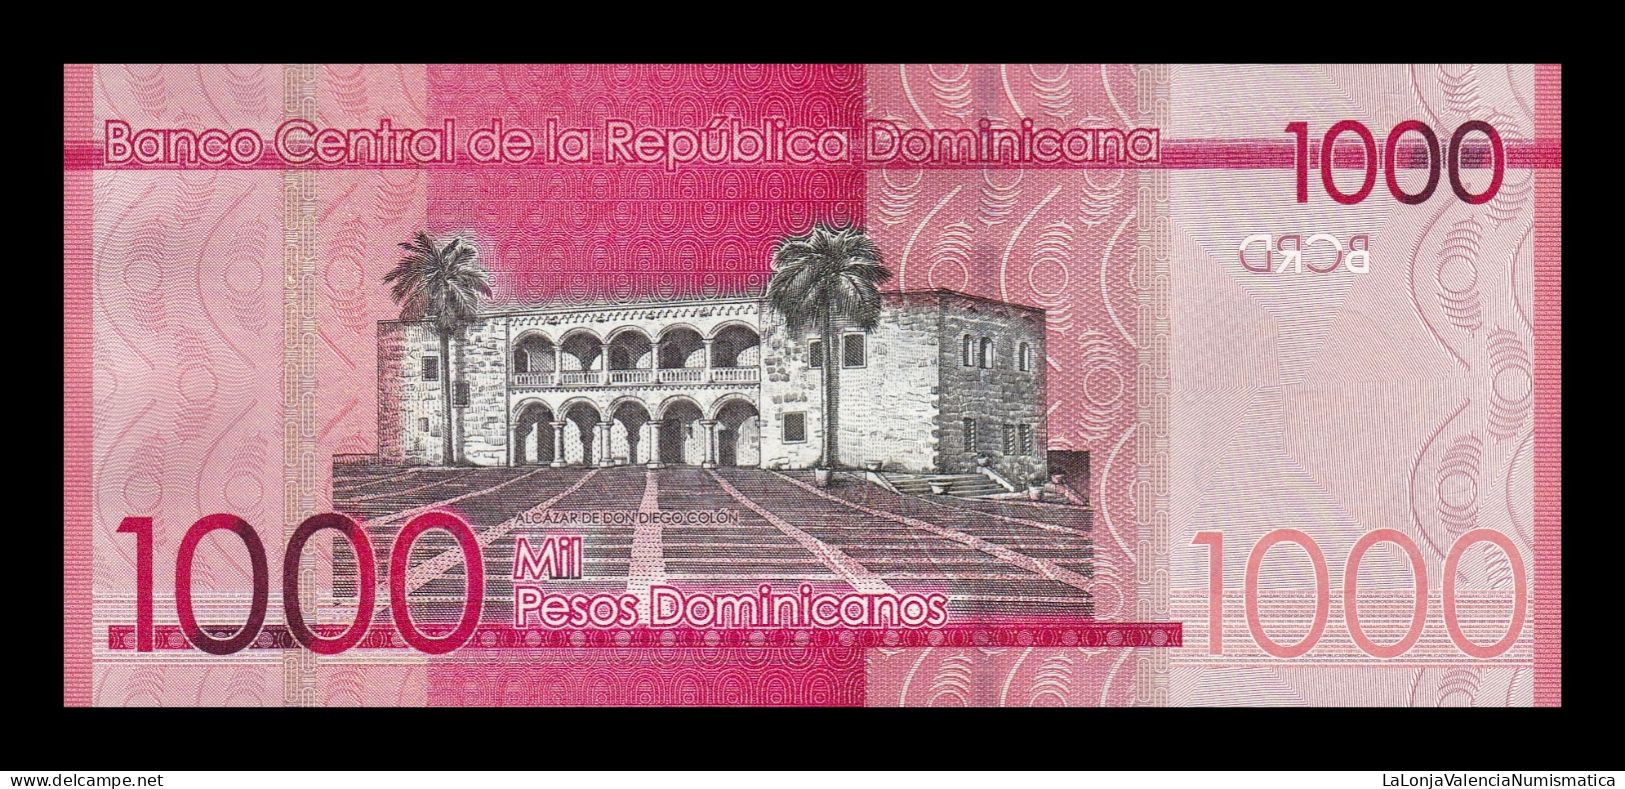 República Dominicana 1000 Pesos Dominicanos 2014 Pick 193a Low Serial 865 Sc Unc - República Dominicana